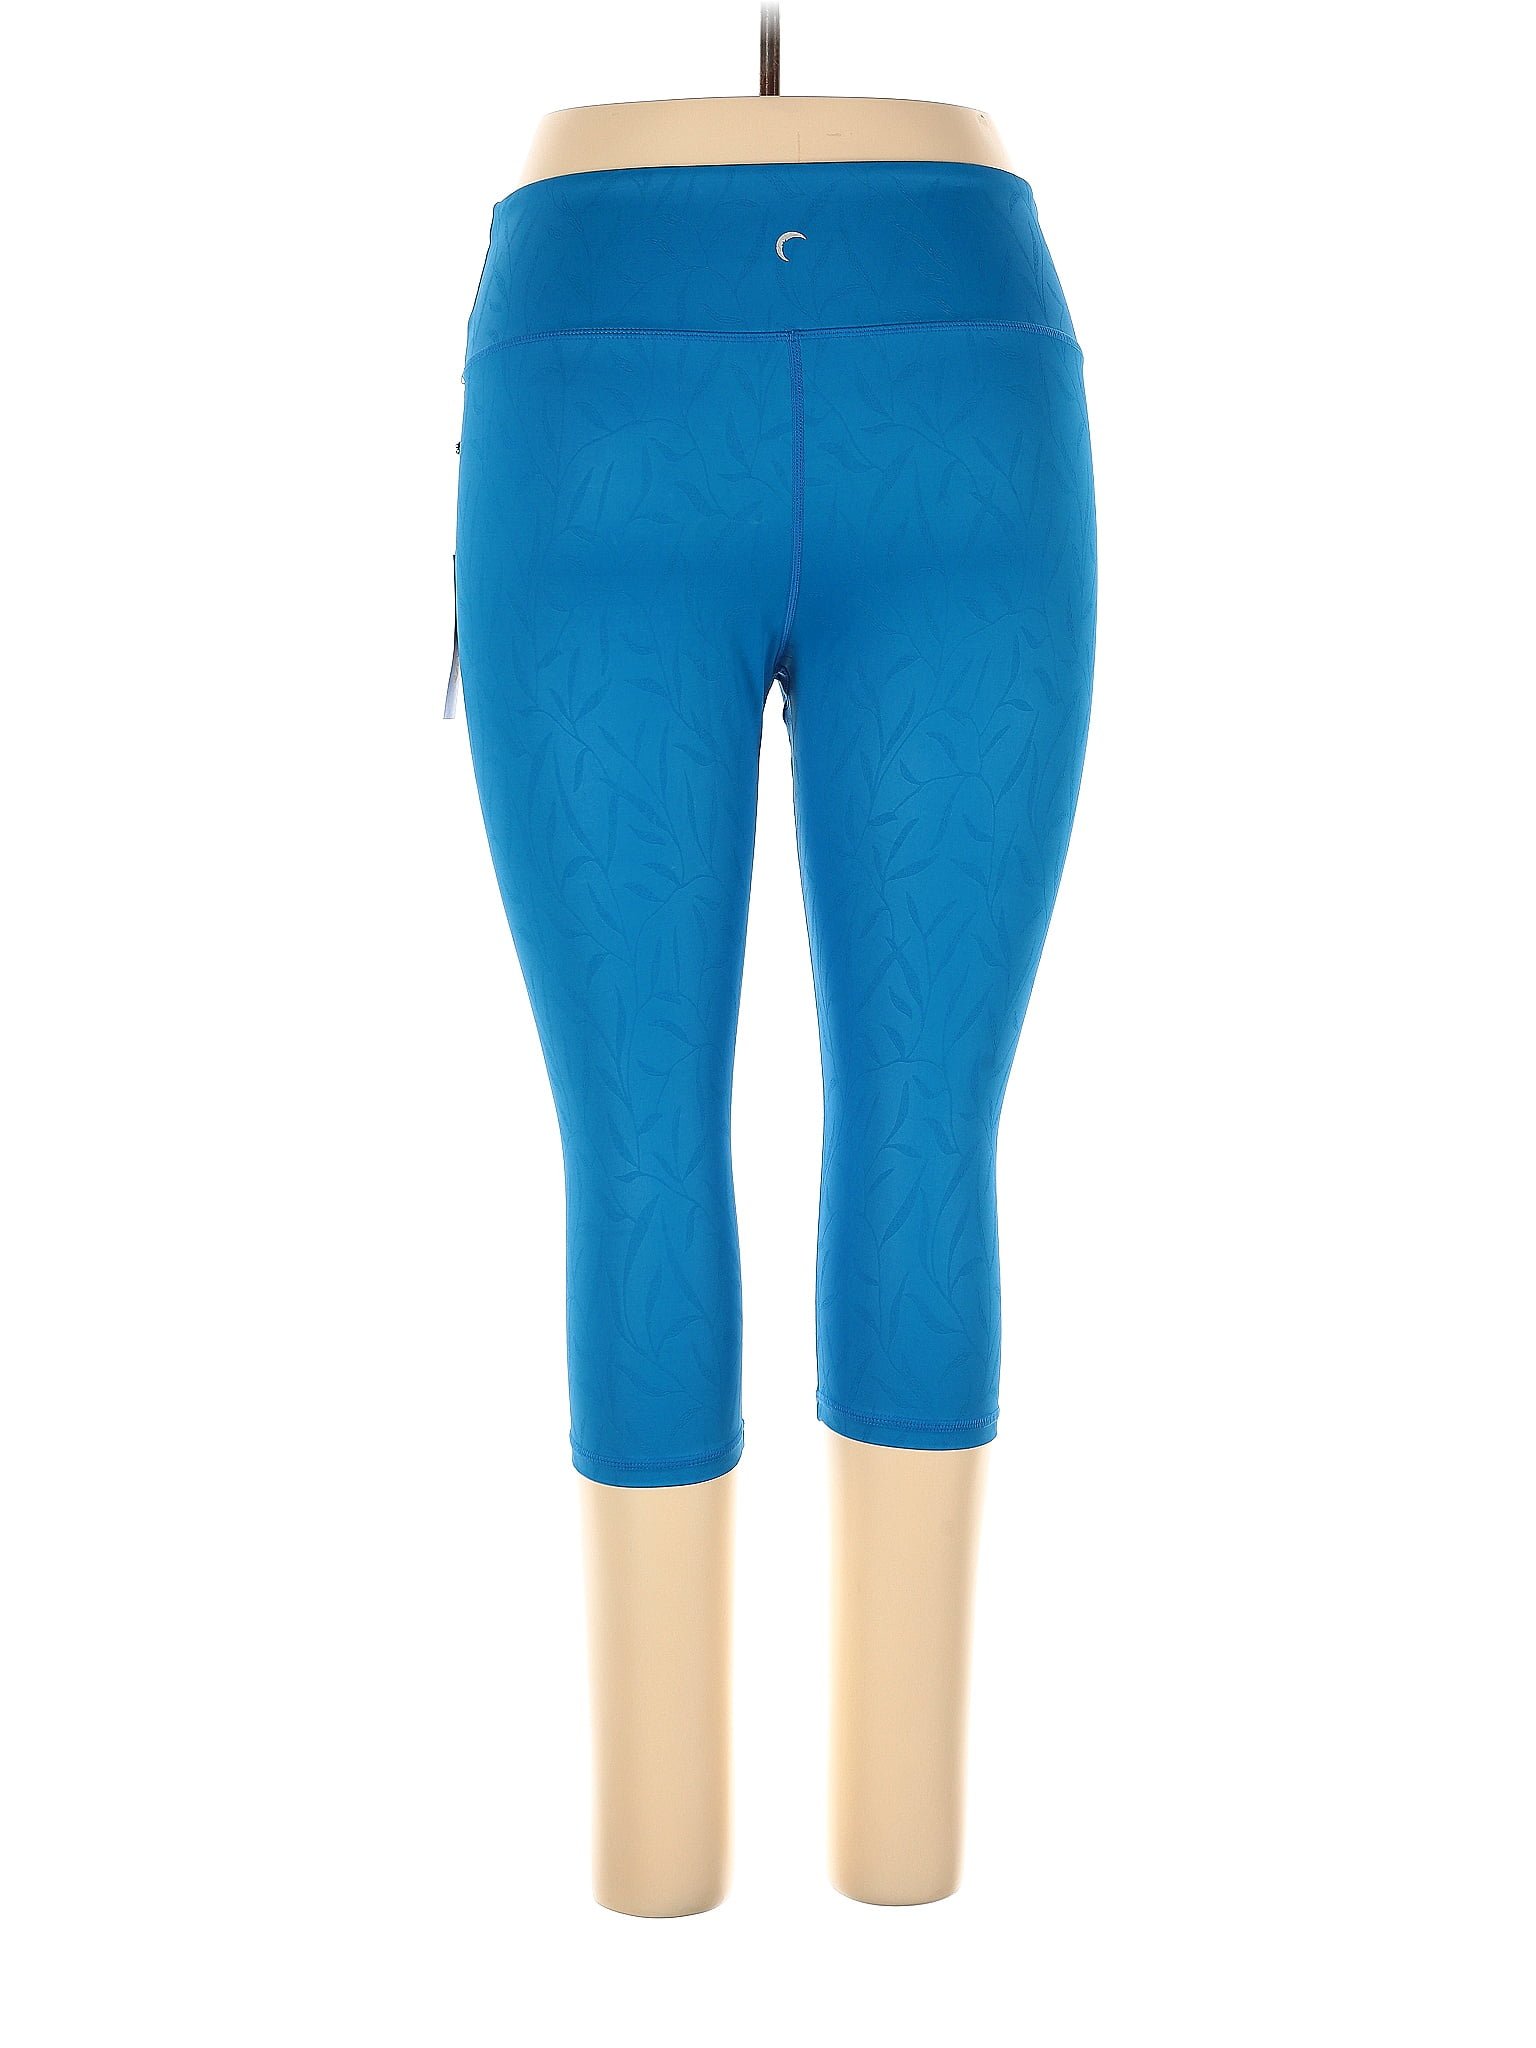 Zyia Active Blue Active Pants Size 20 (Plus) - 63% off